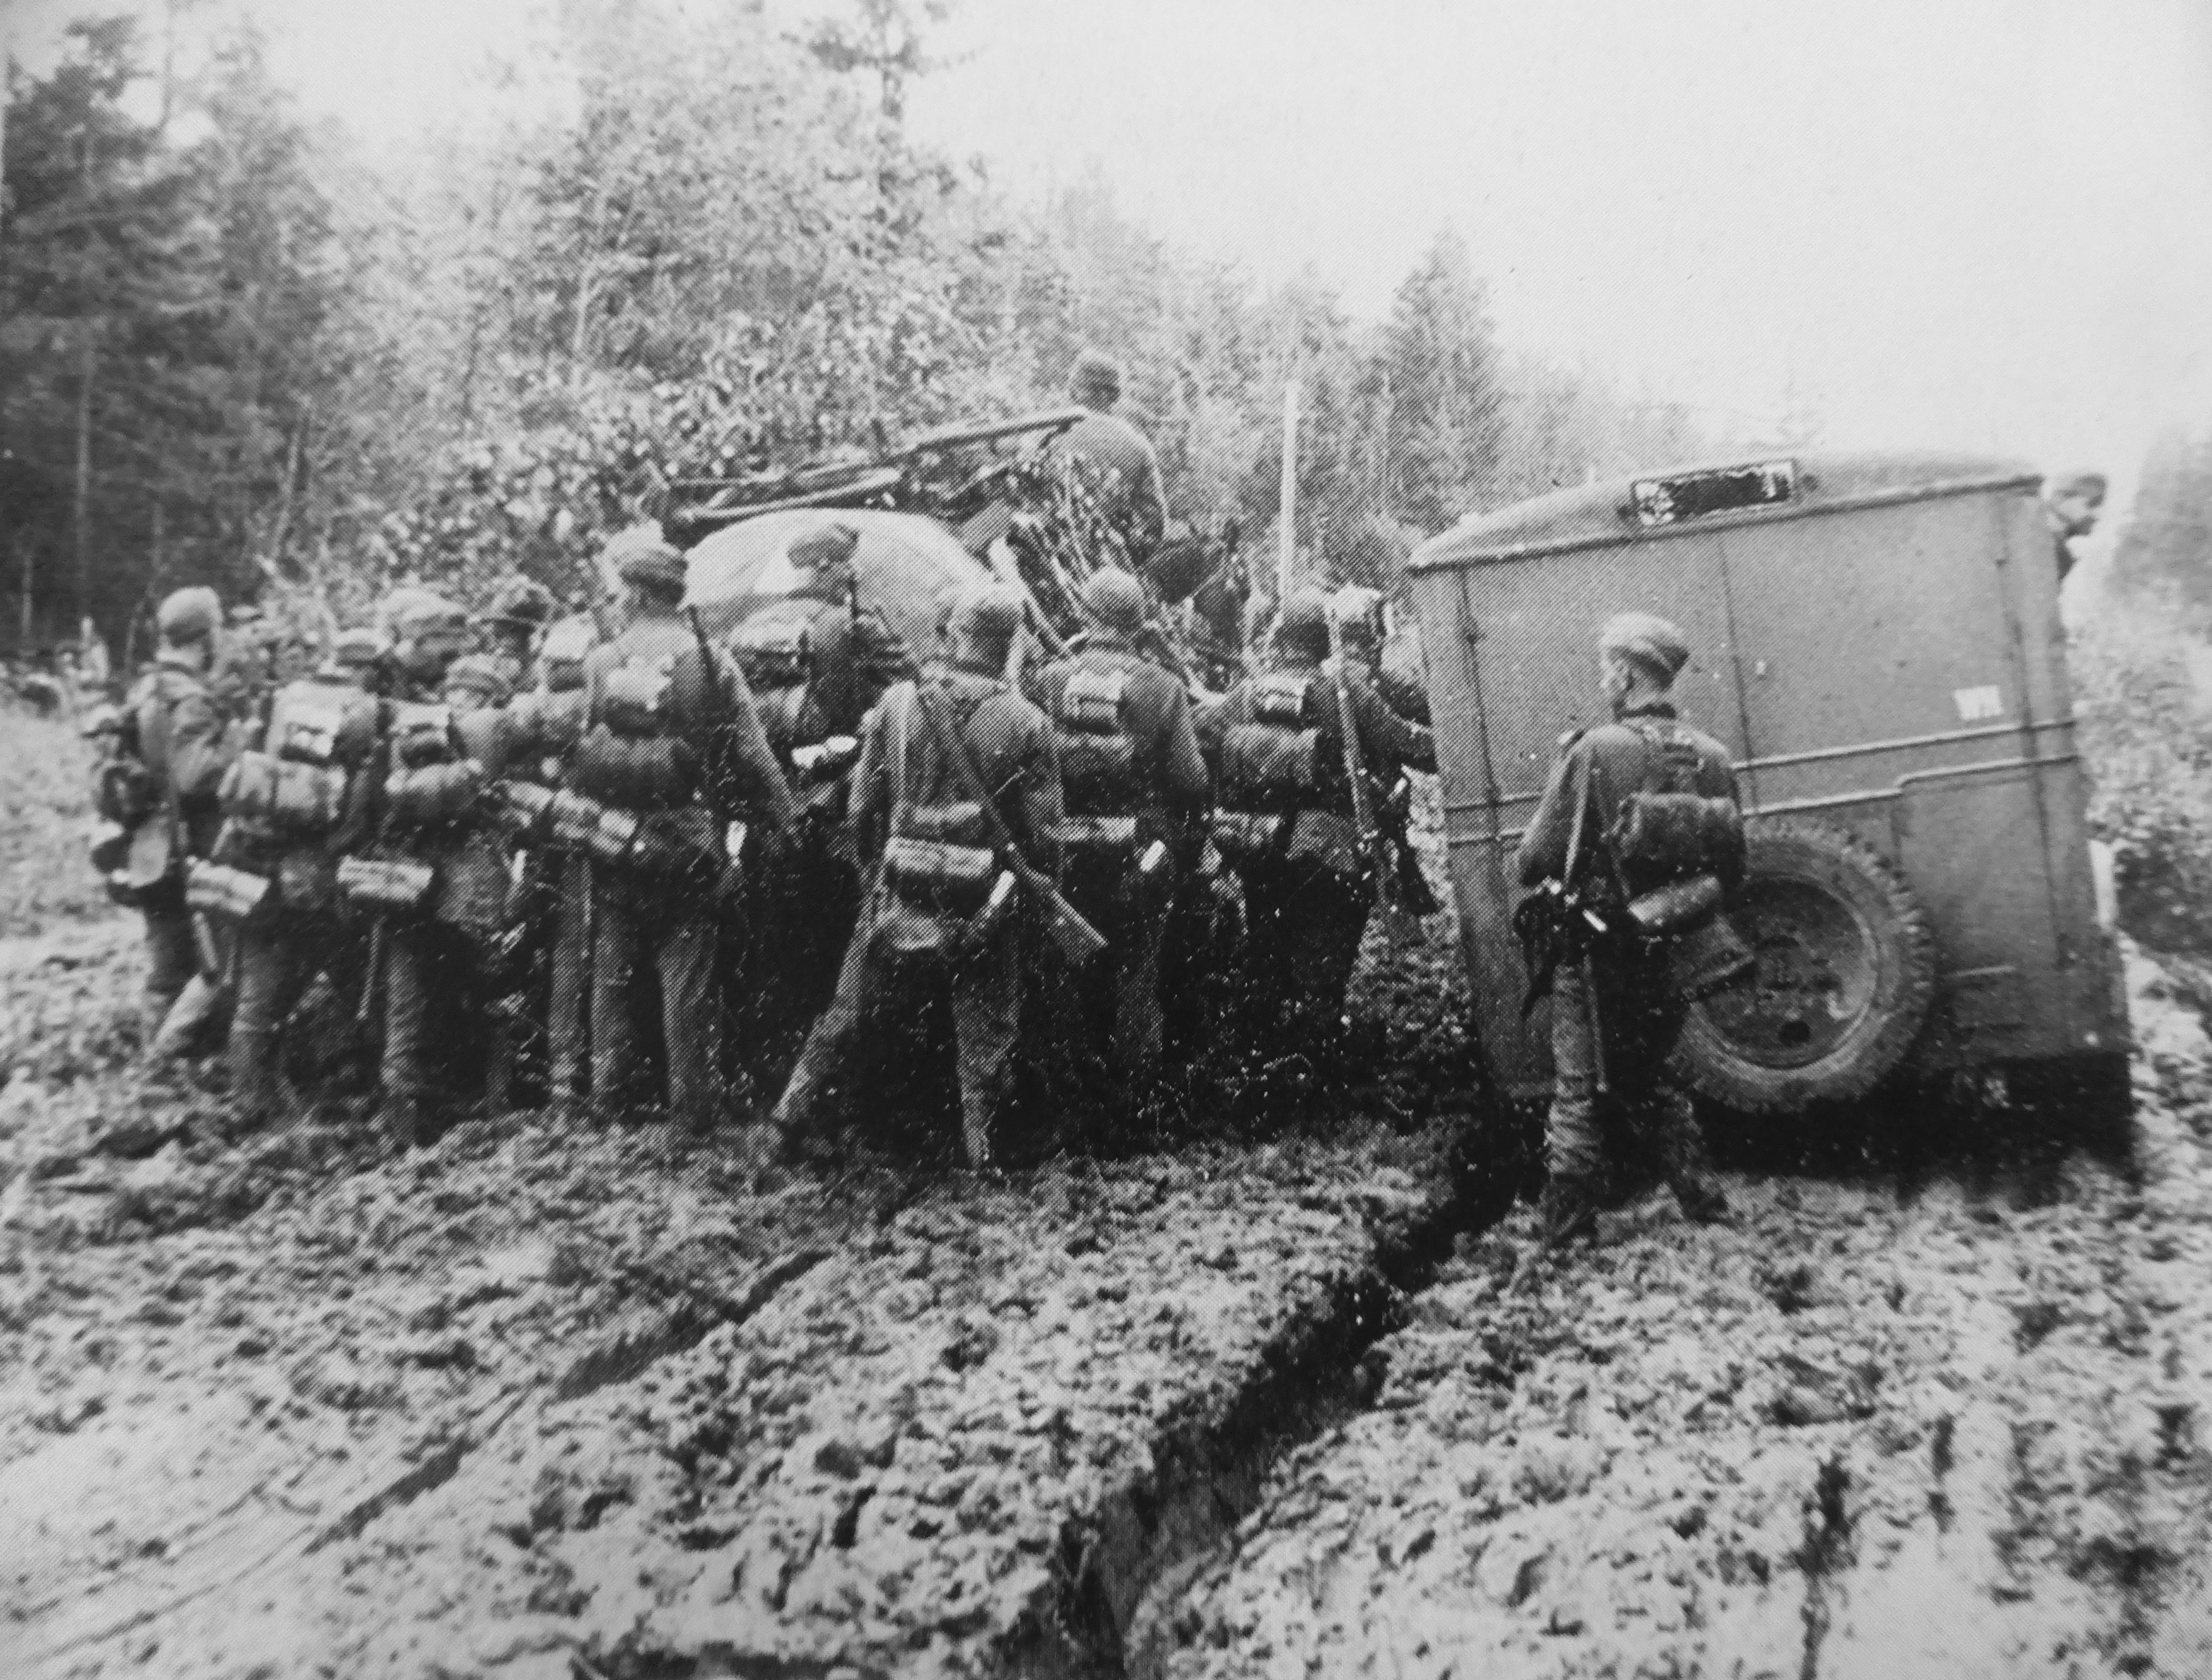 Фронт телега. Октябрь 1941 грязь распутица. Солдаты вермахта 22 июня 1941. Немецкие танки в грязи 1941.